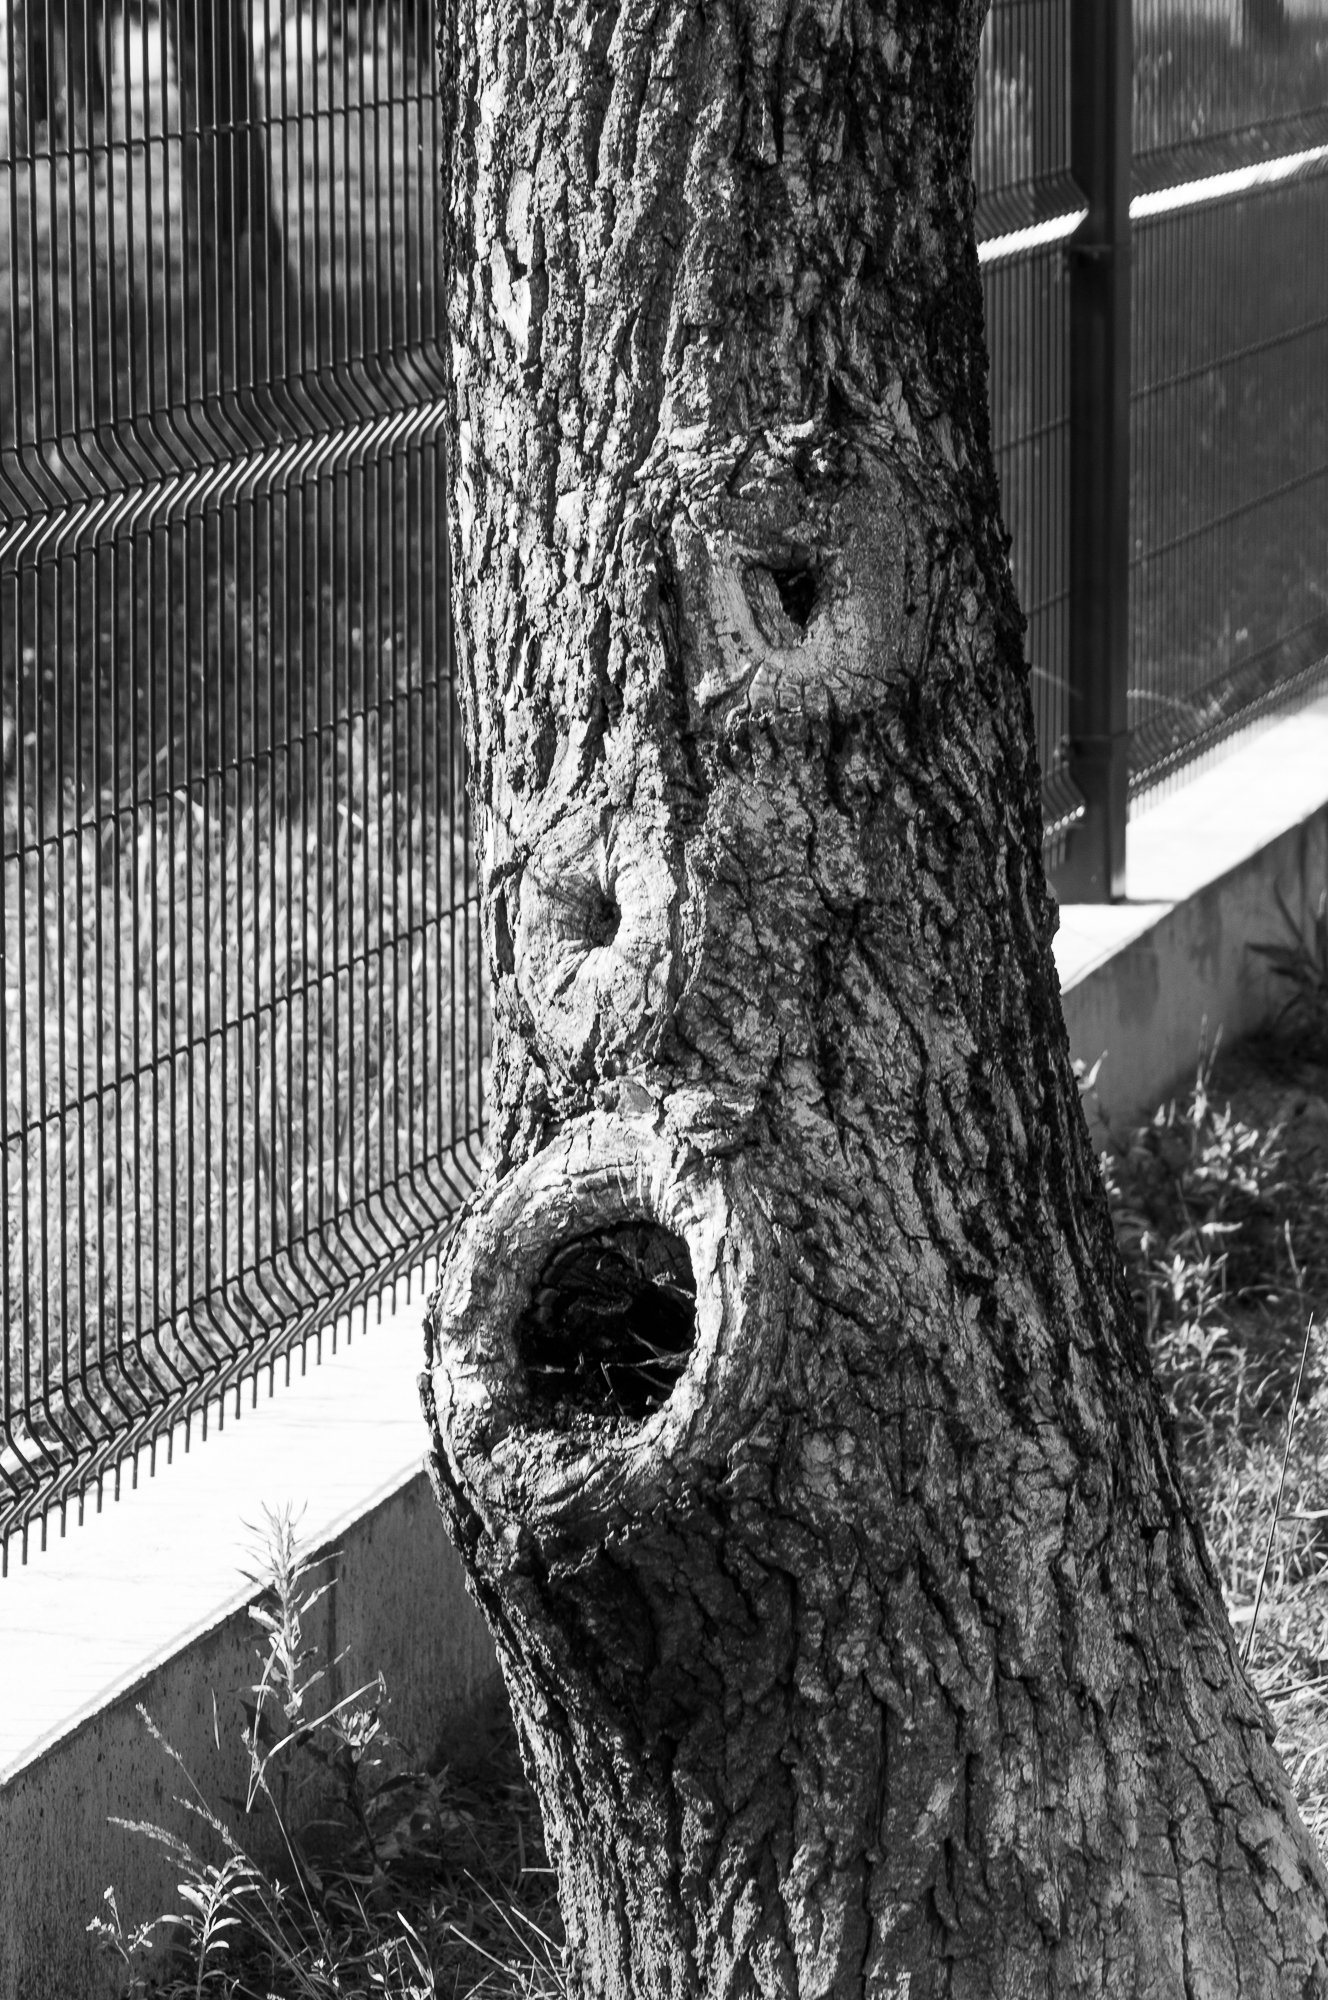 Adam Mazek Photography Warsaw 2020. Post: "Immortalizing." Minimalism. Tree. You shall not pass. Creepy. Face.